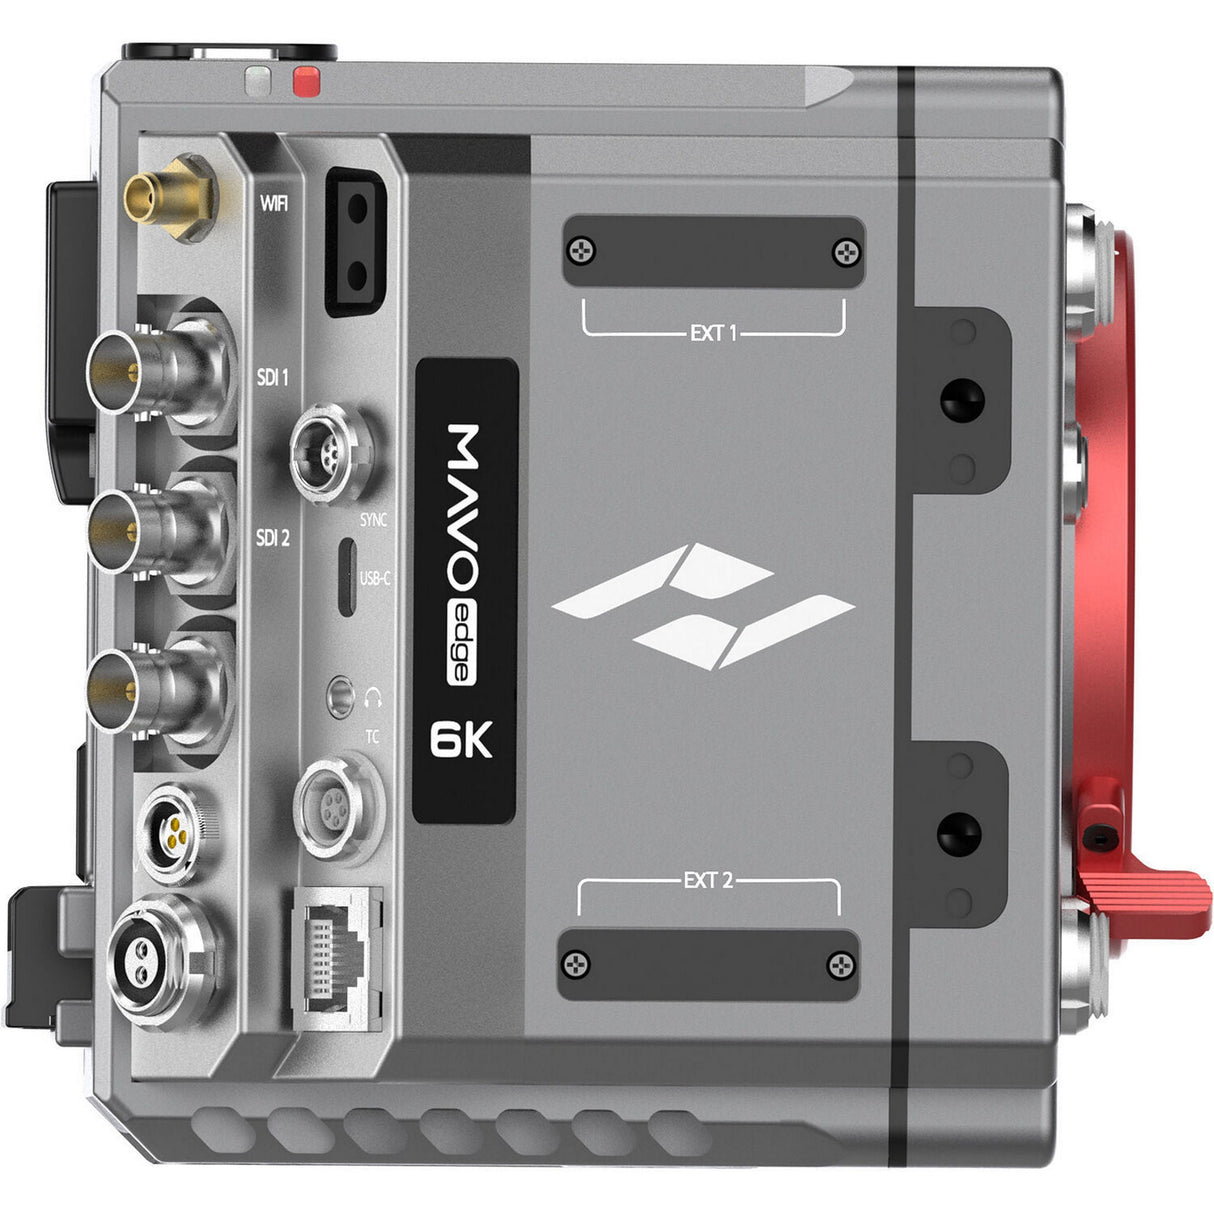 Kinefinity MAVO Edge 6K 3:2 Full Frame CMOS Imaging Sensor Camera Body